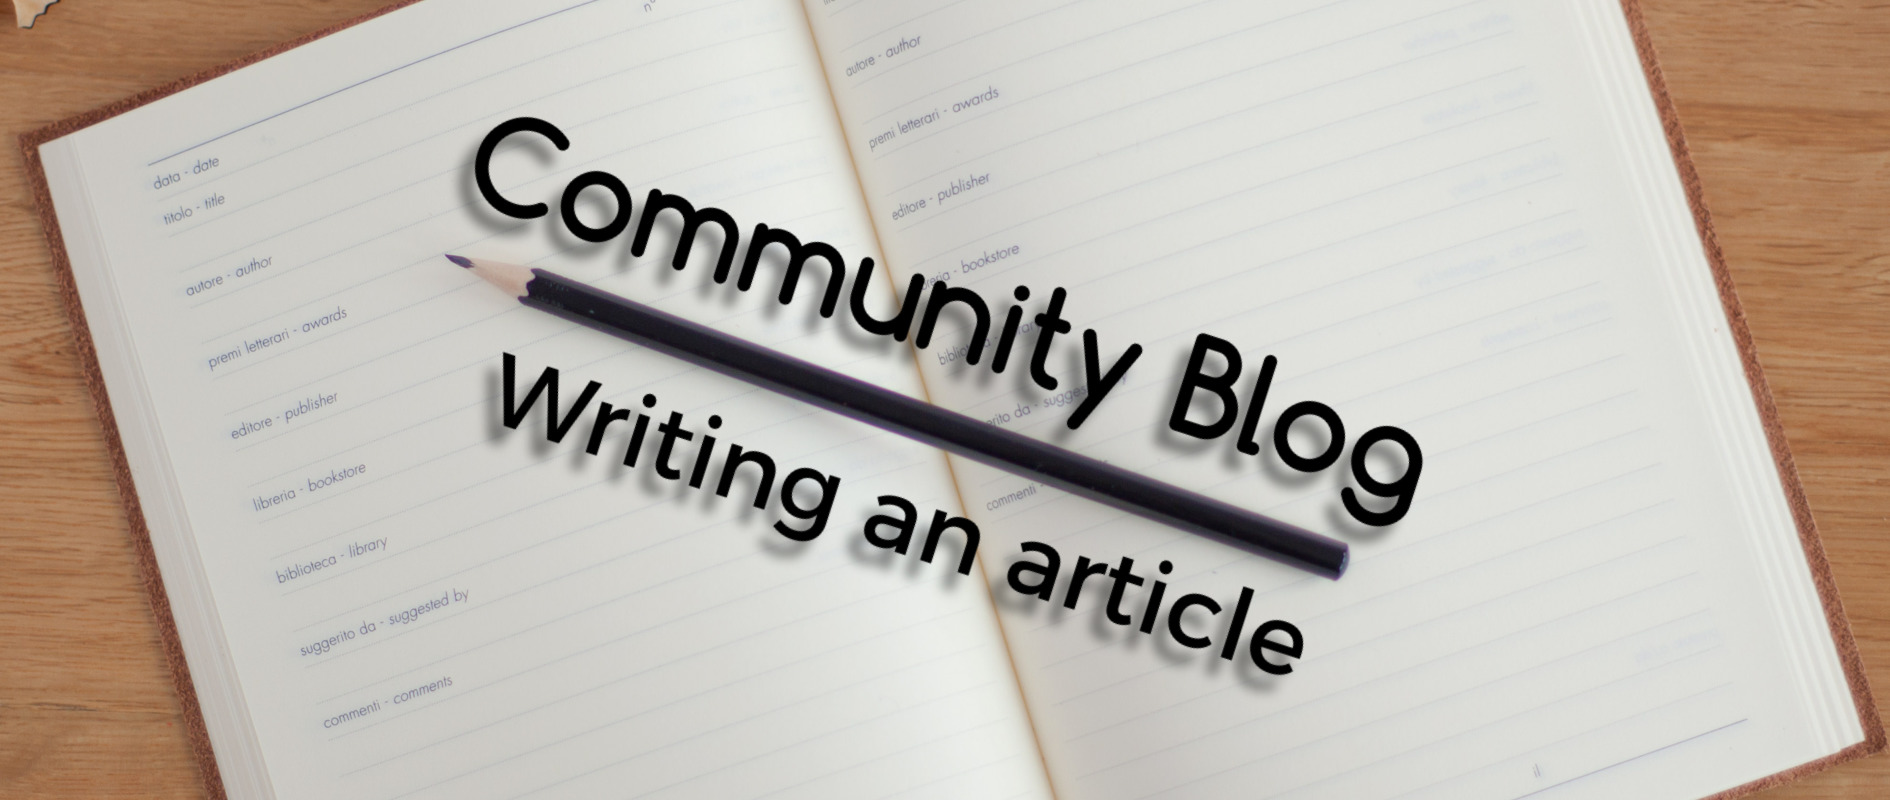 Writing a Community Blog article